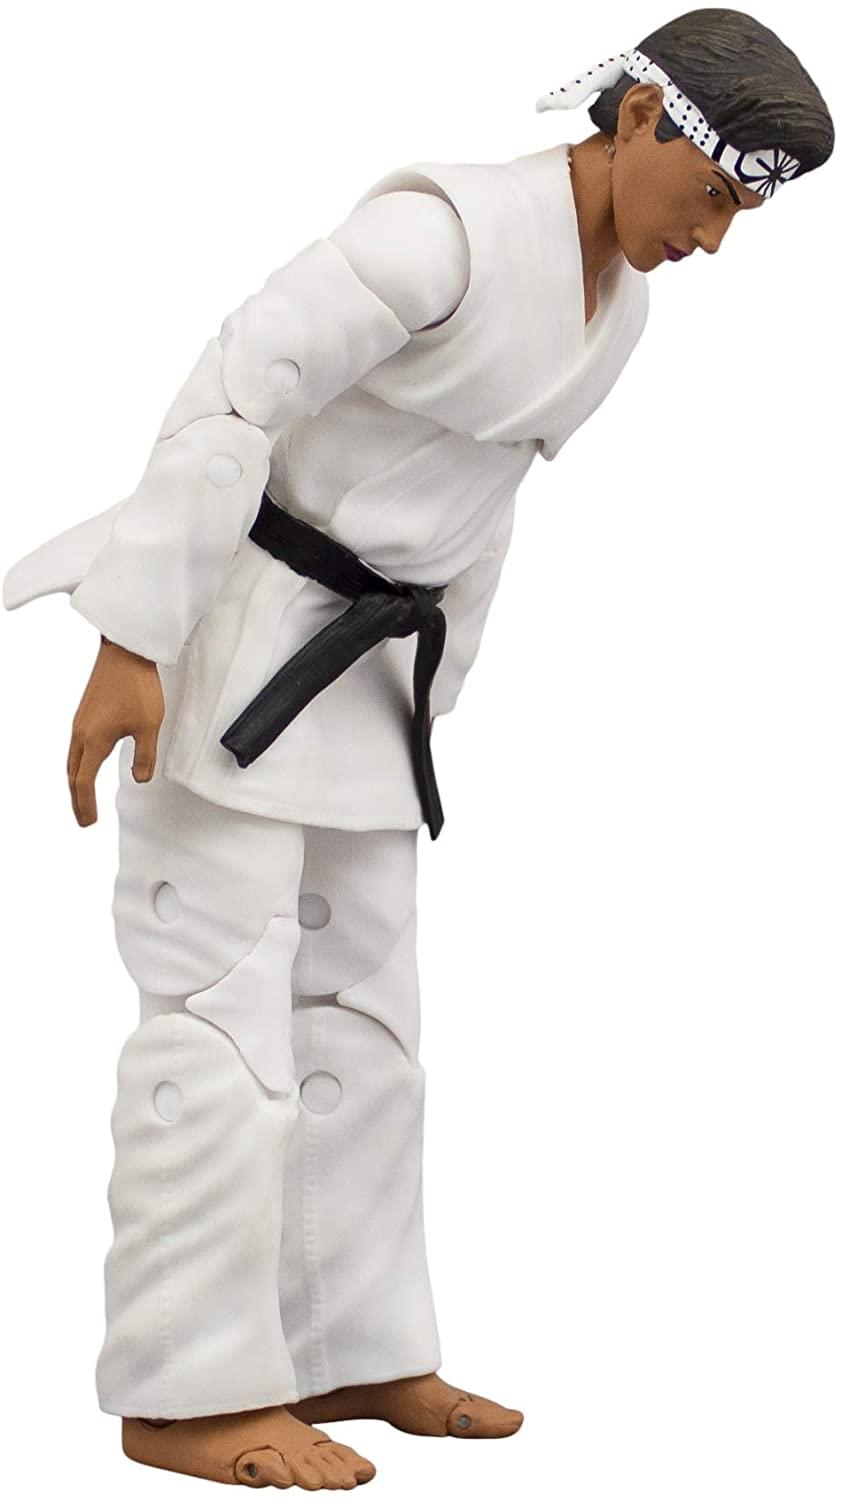 Karate Kid Daniel Larusso 6" Action Figure